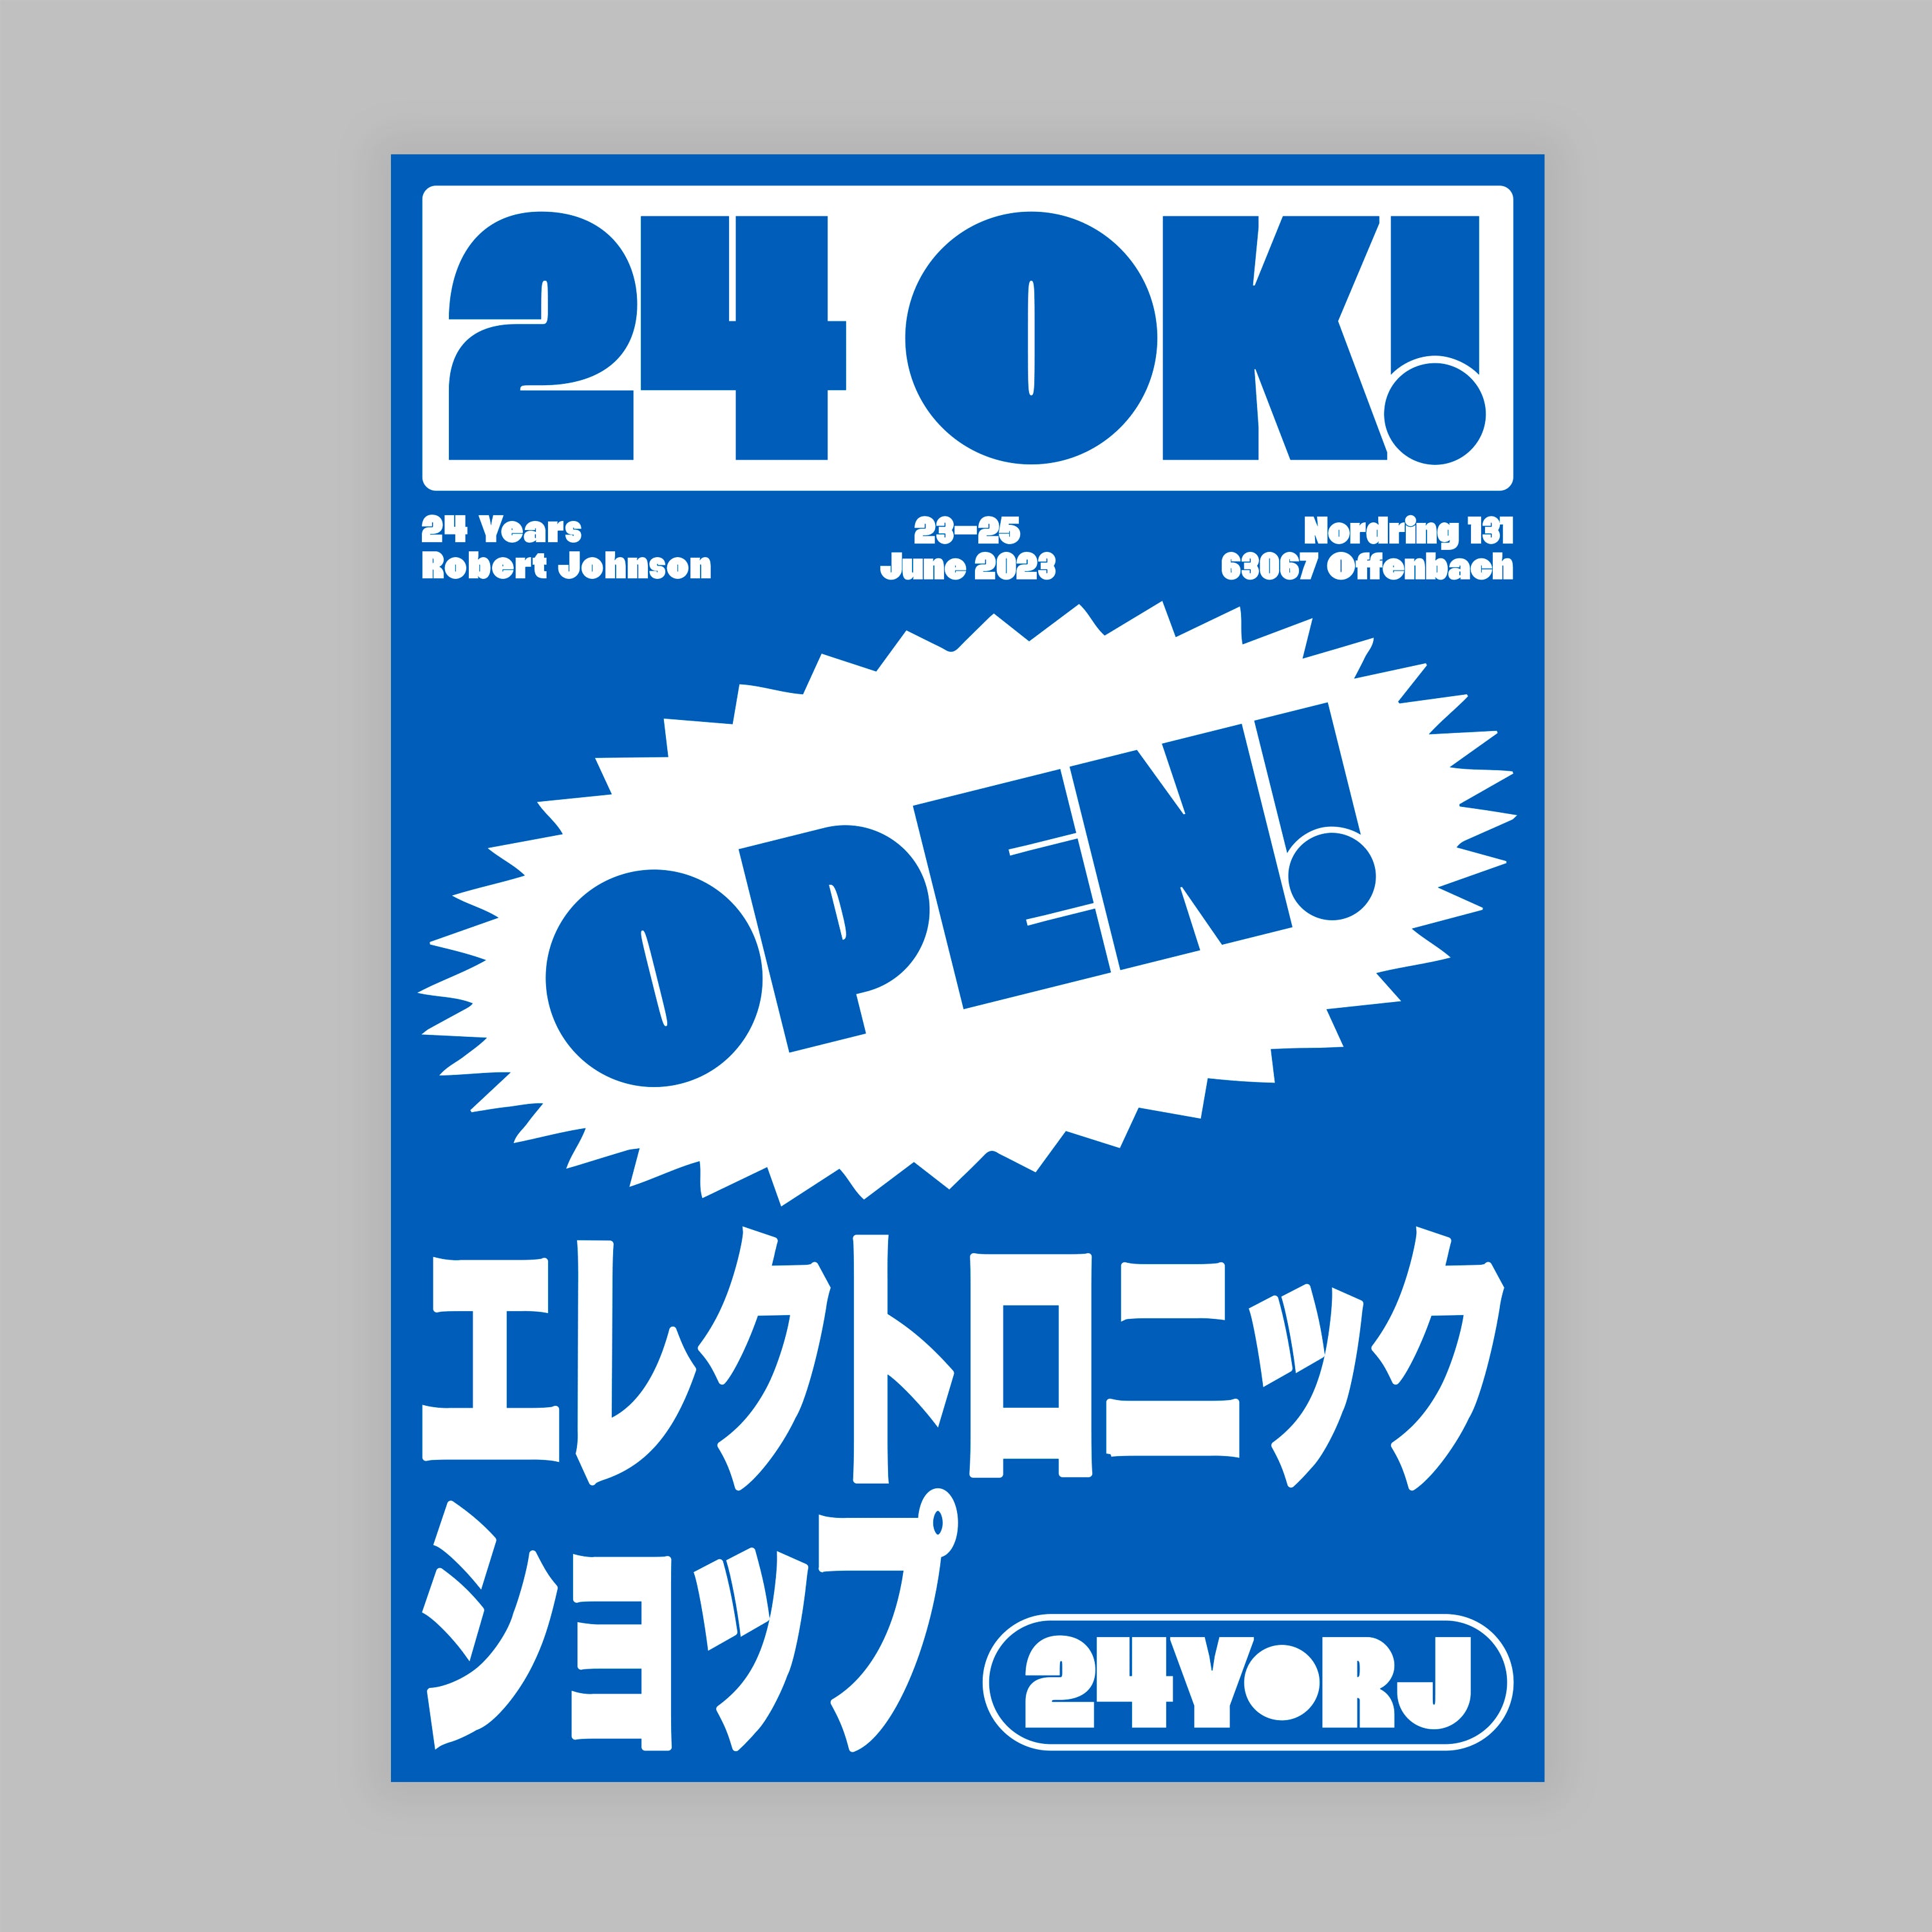 "24!OK!" - Poster by Dominik Keller & Jonas Huhn - Blue